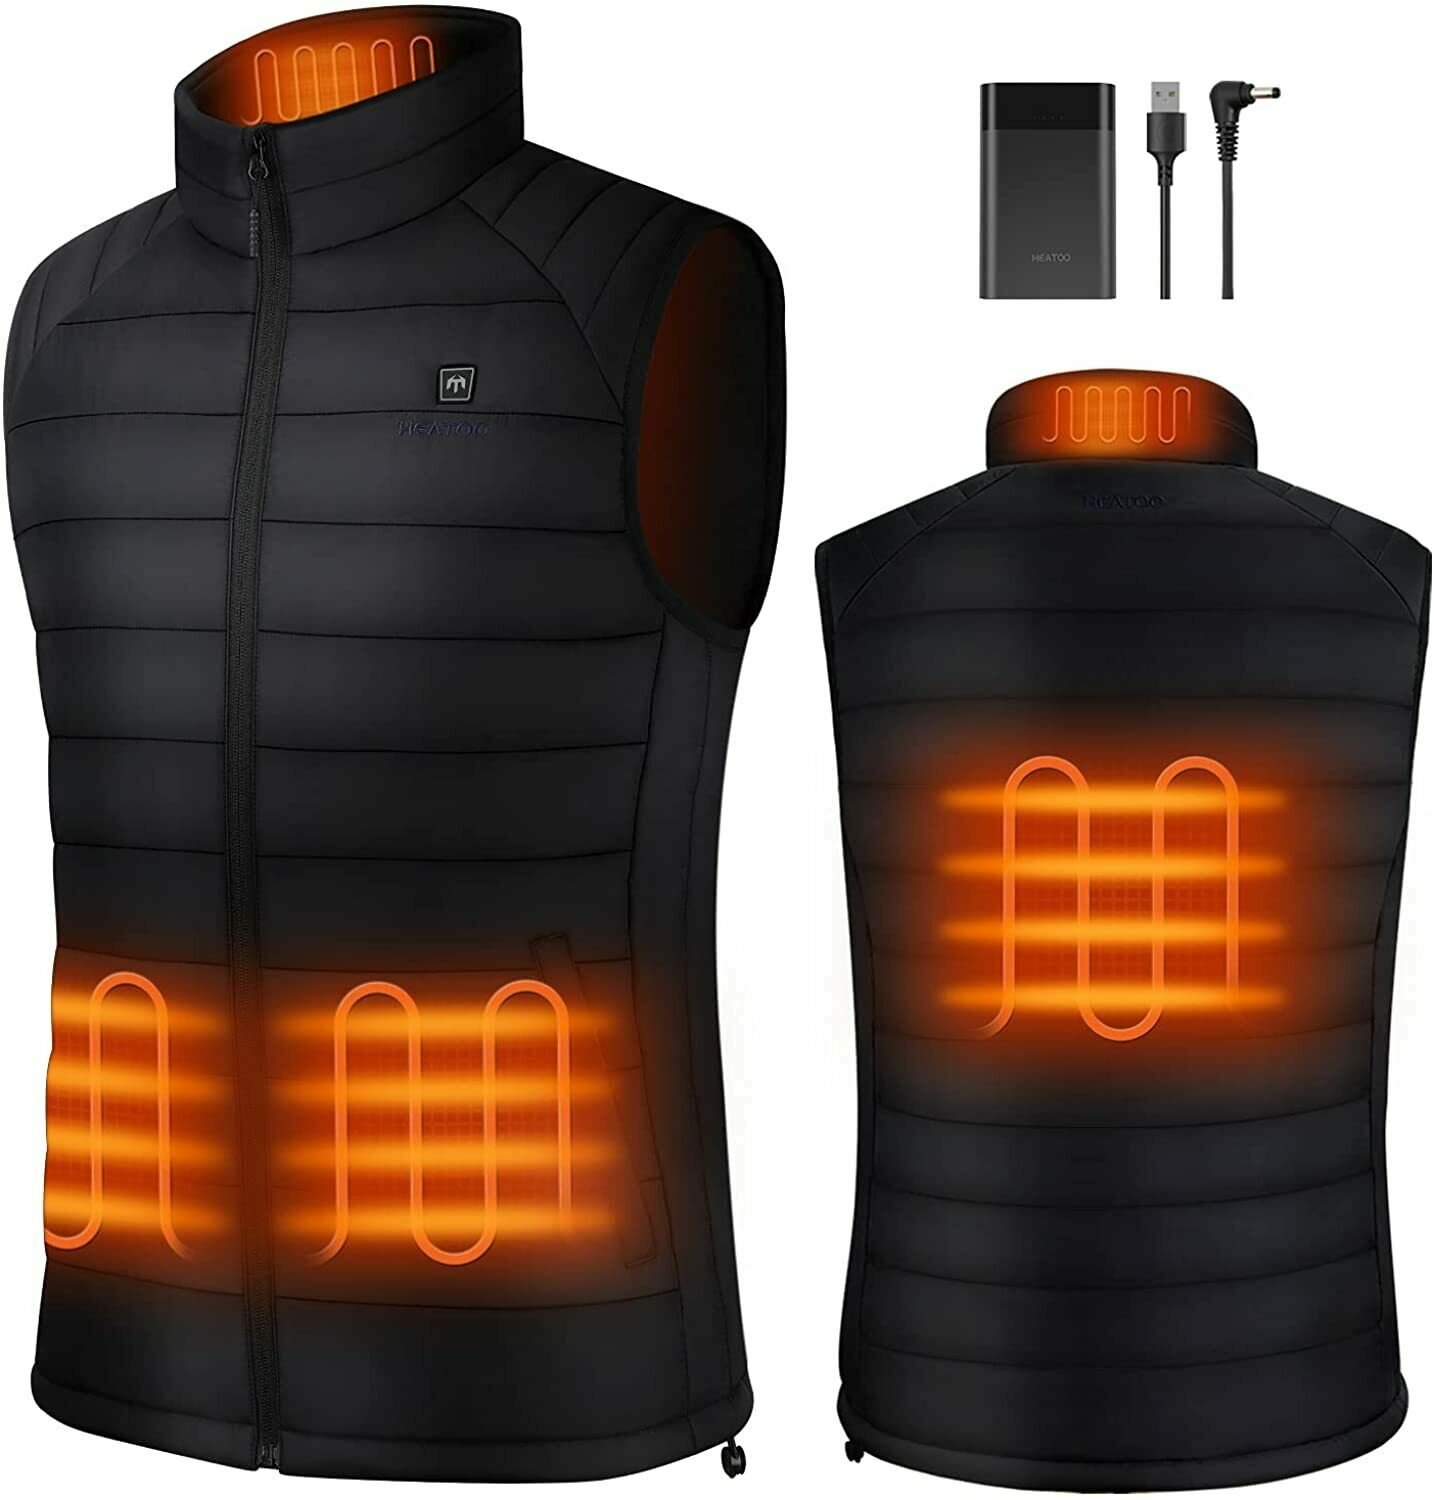 Heated Vest for Men Lightweight Heating Jackets, size M